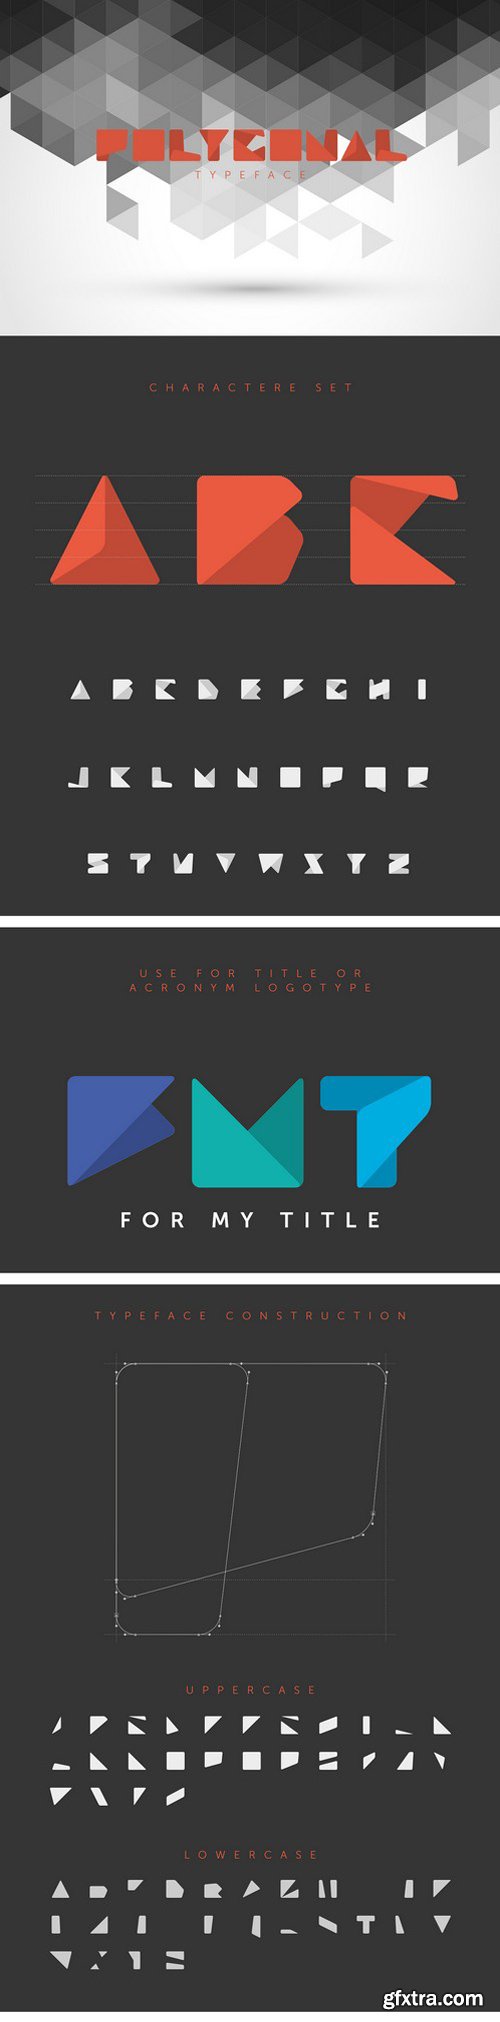 Polygonal typeface